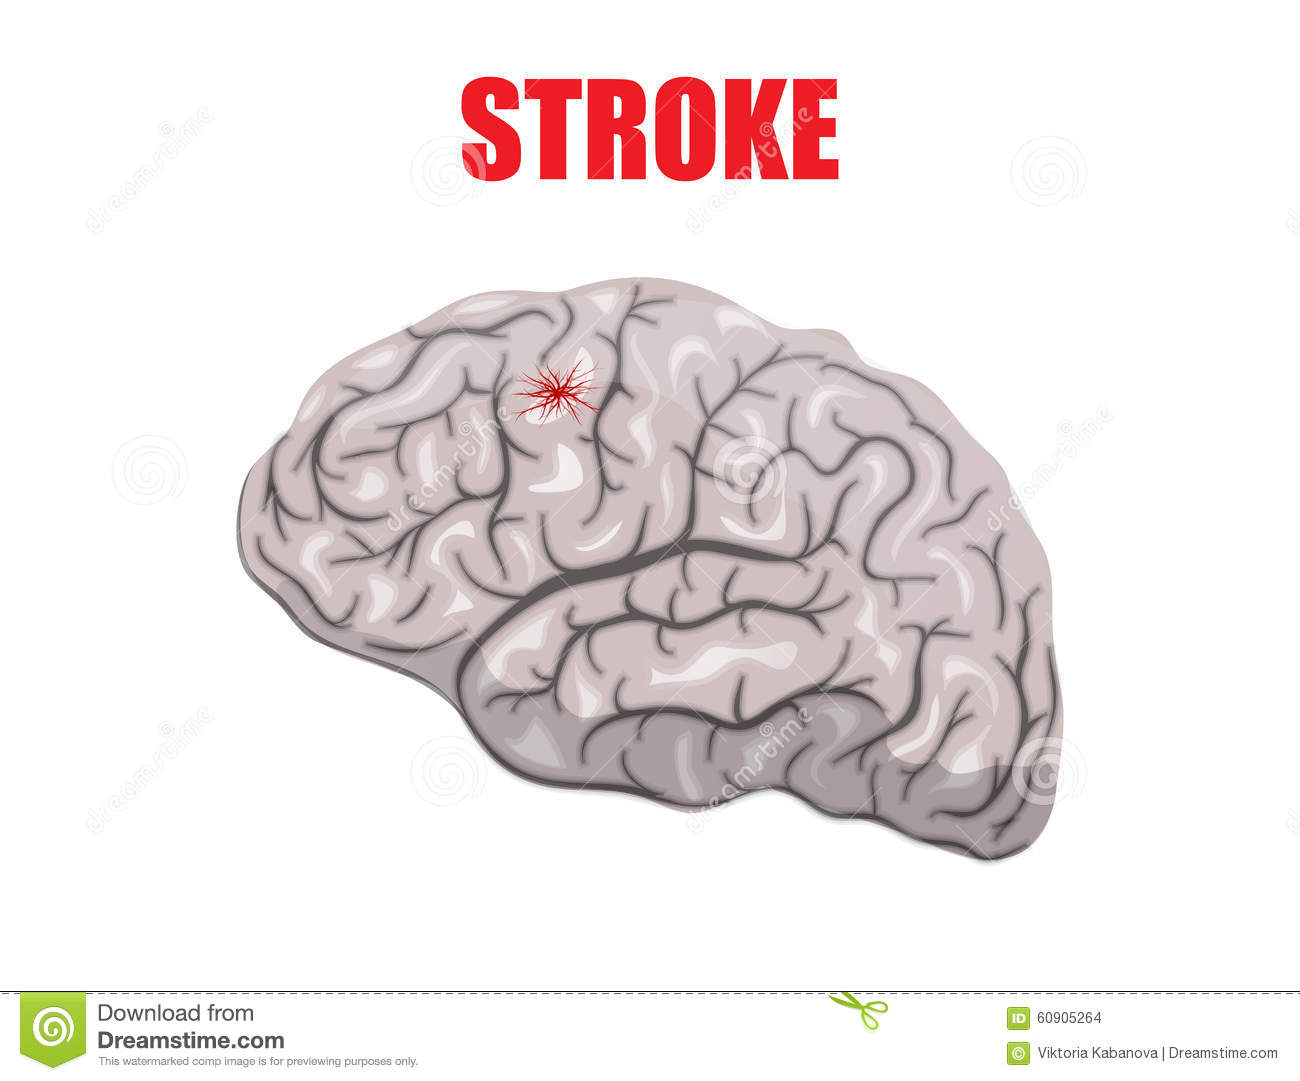 Illustration Of A Hemorrhagic Stroke